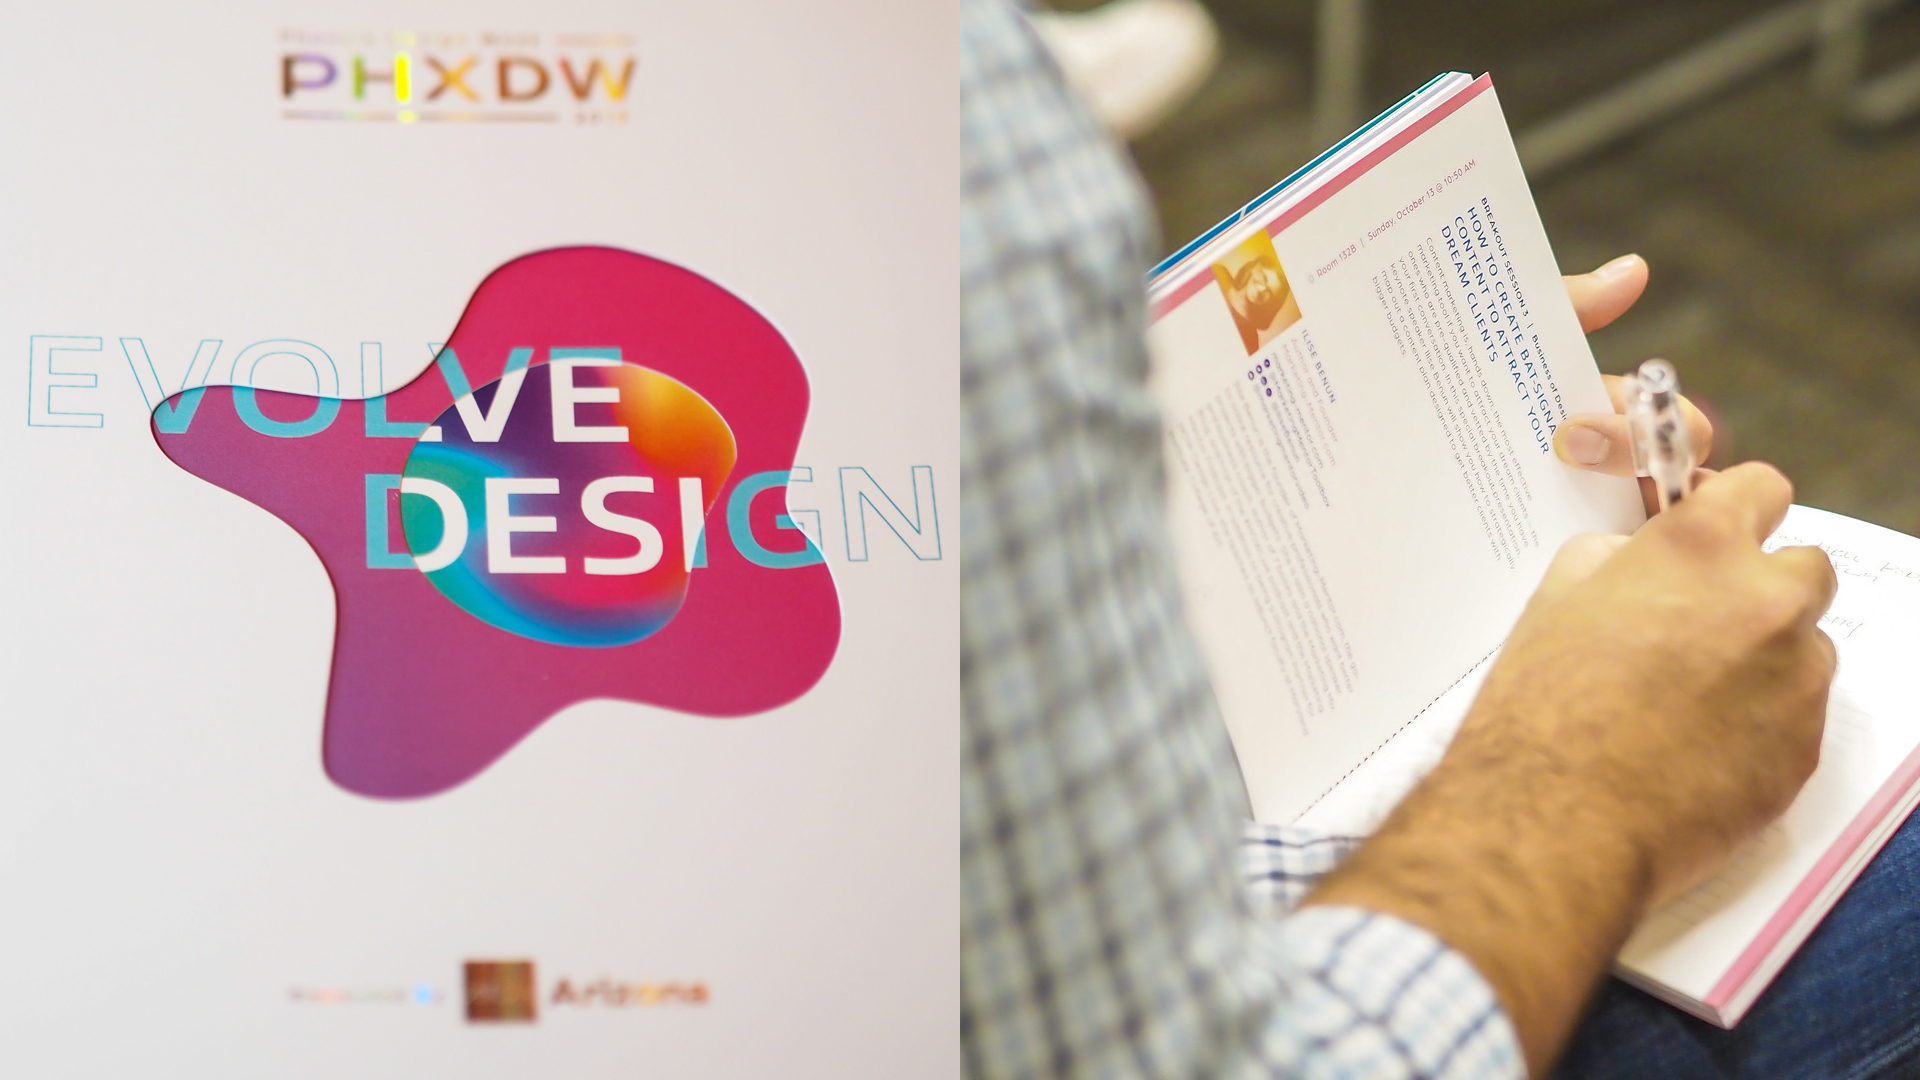 featured image two:Phoenix Design Week 2019: Evolve Design